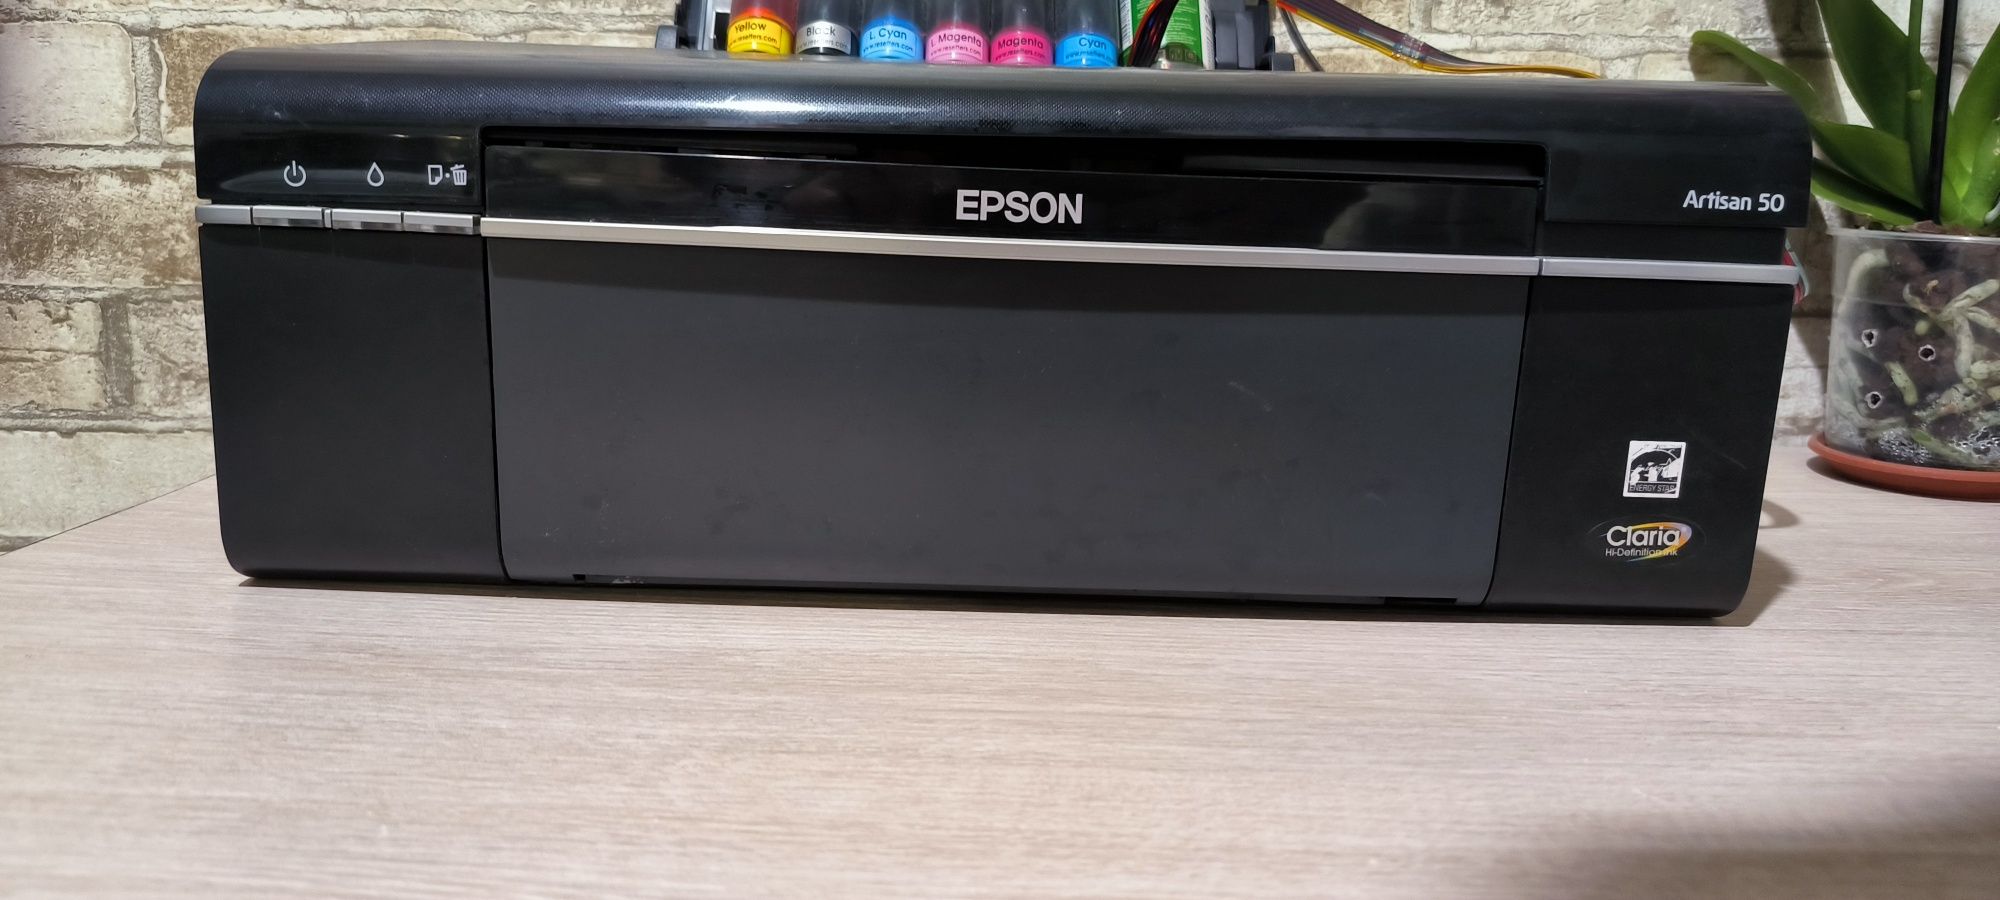 Принтер epson artisan 50 ремонт/запчастини